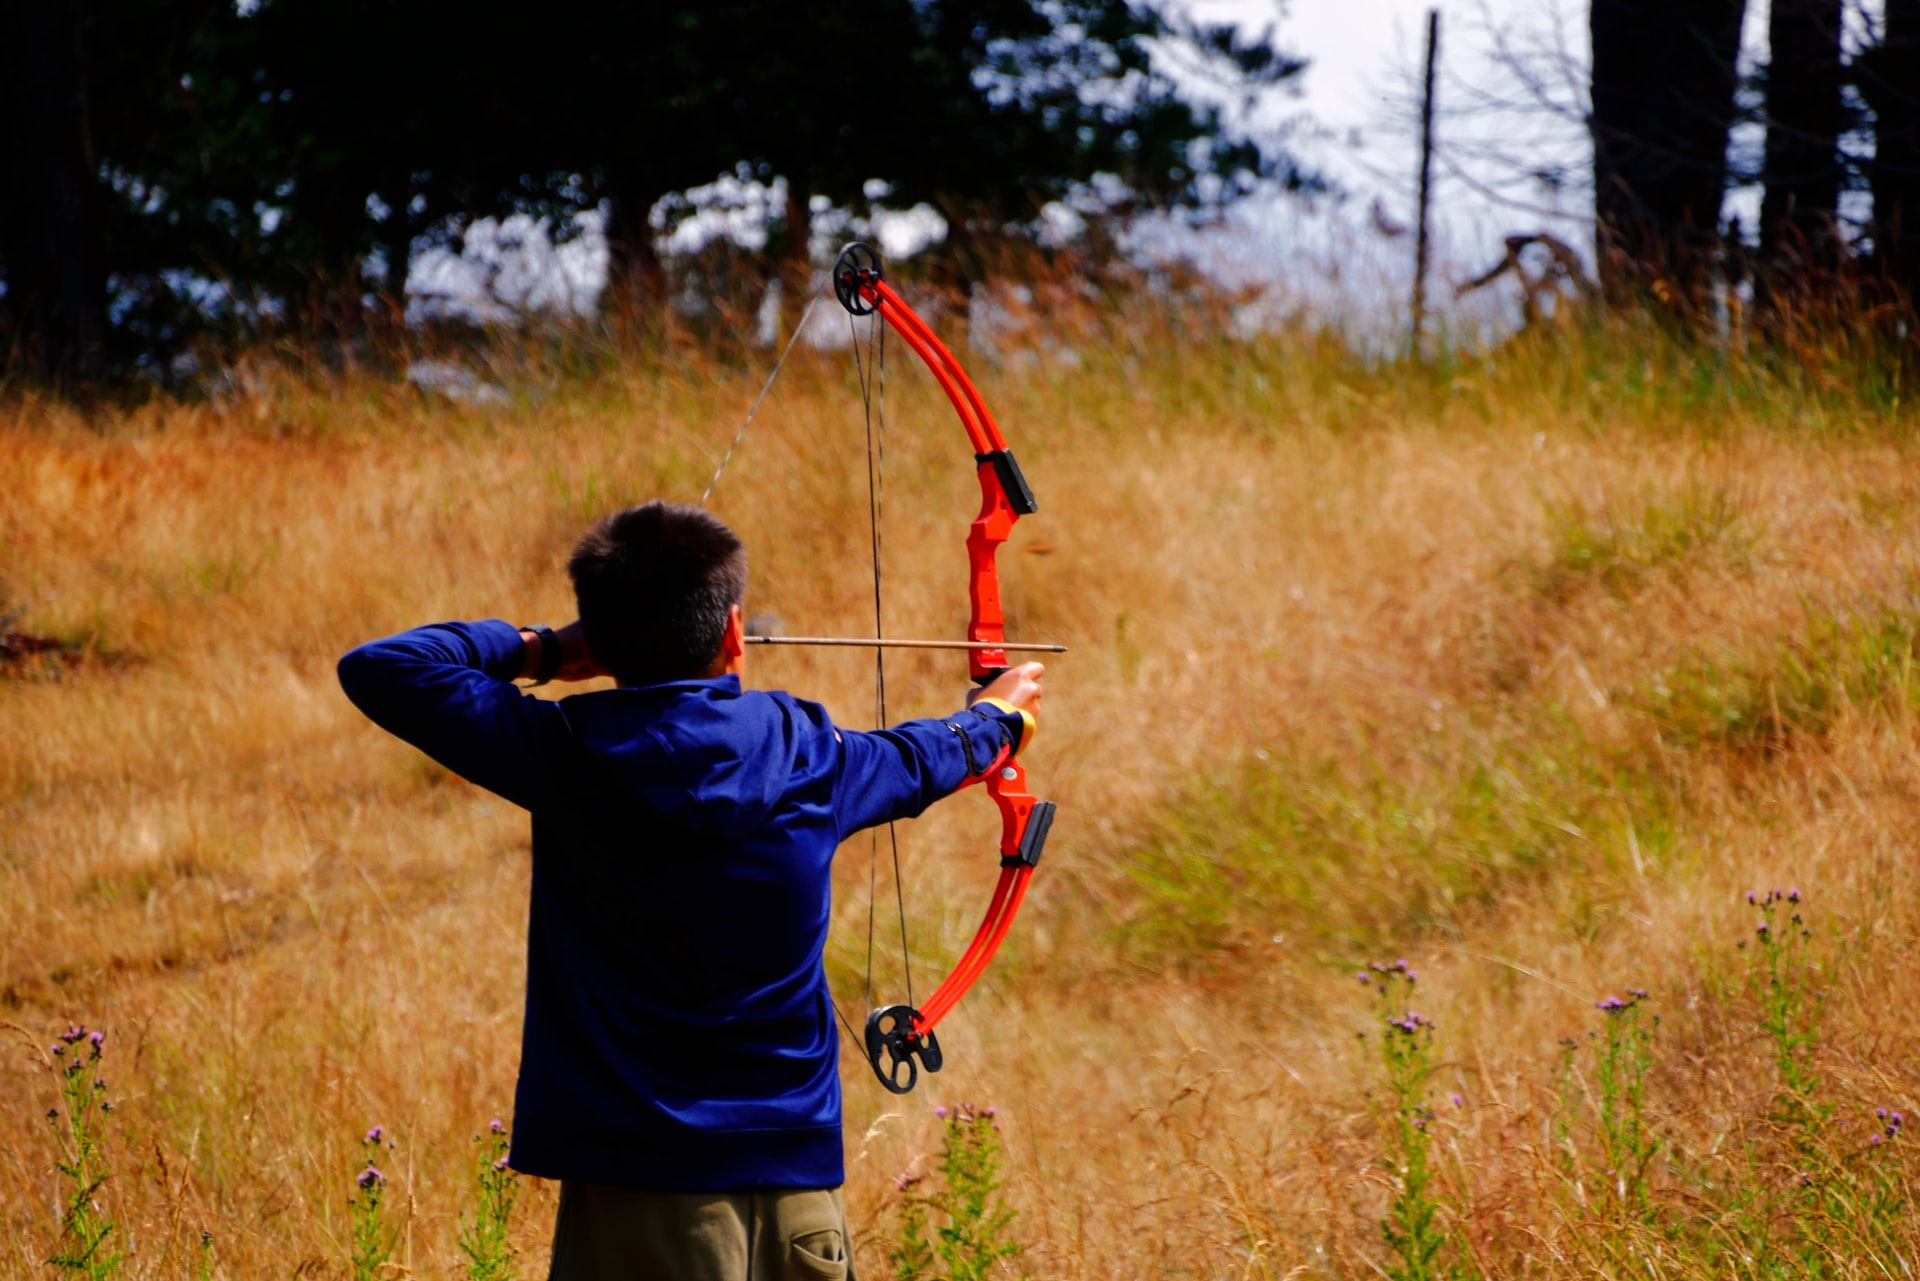 Archery 101: A Beginners Guide